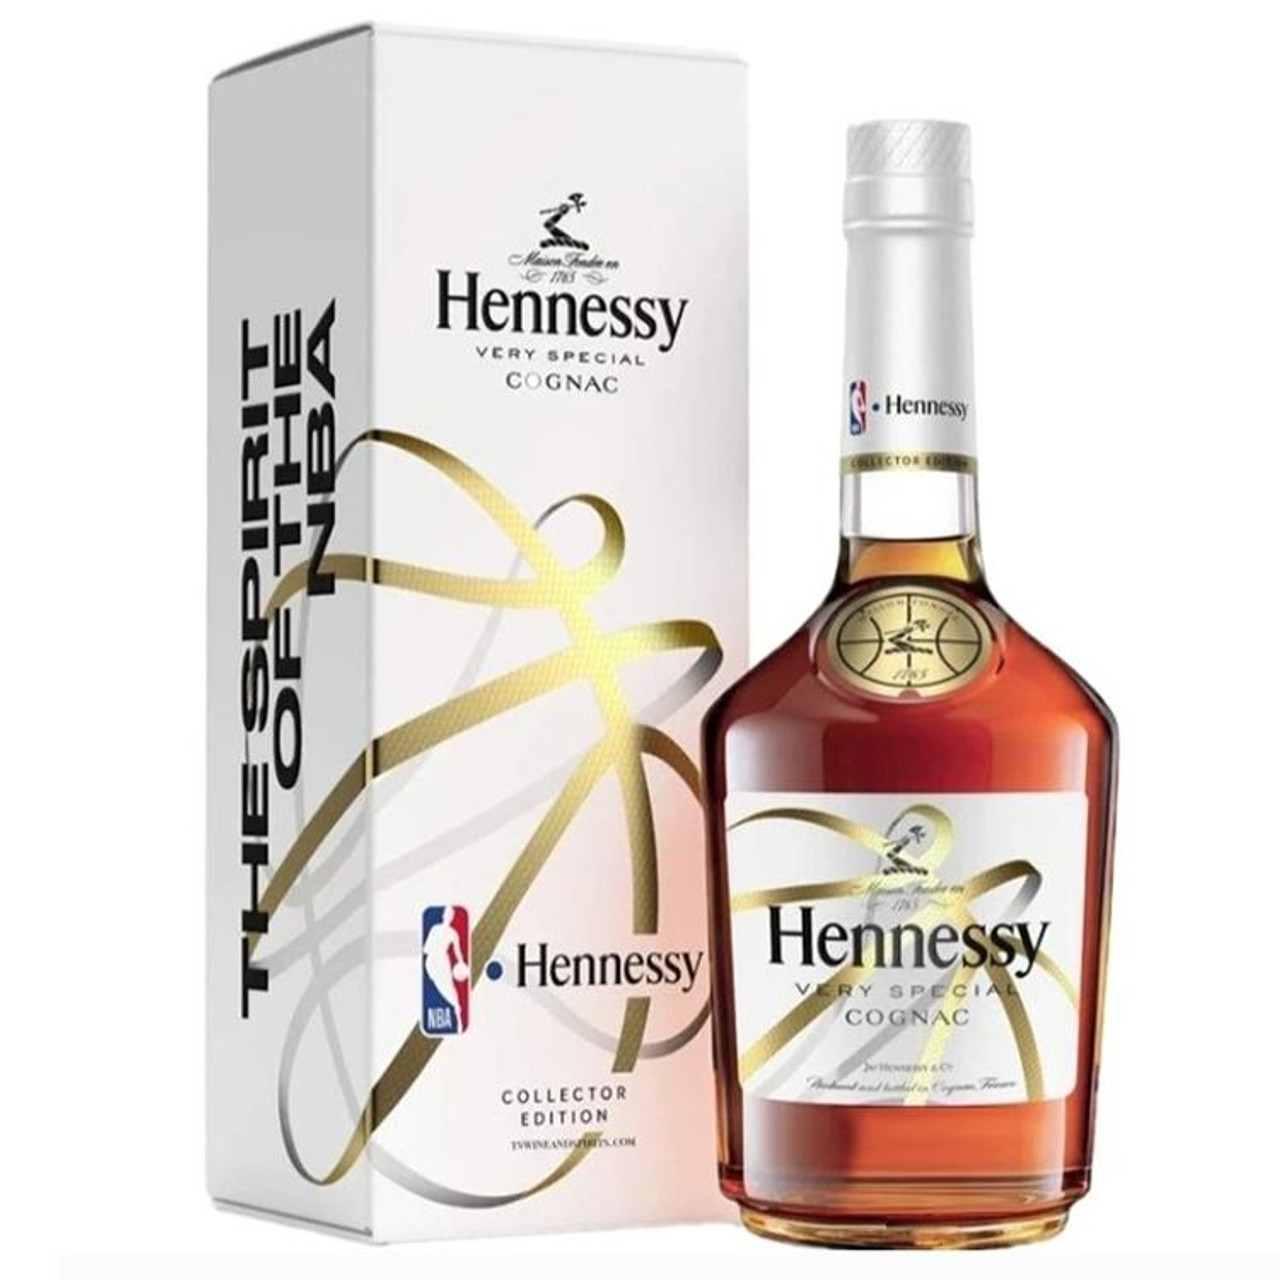 Moët Hennessy USA - The FWA